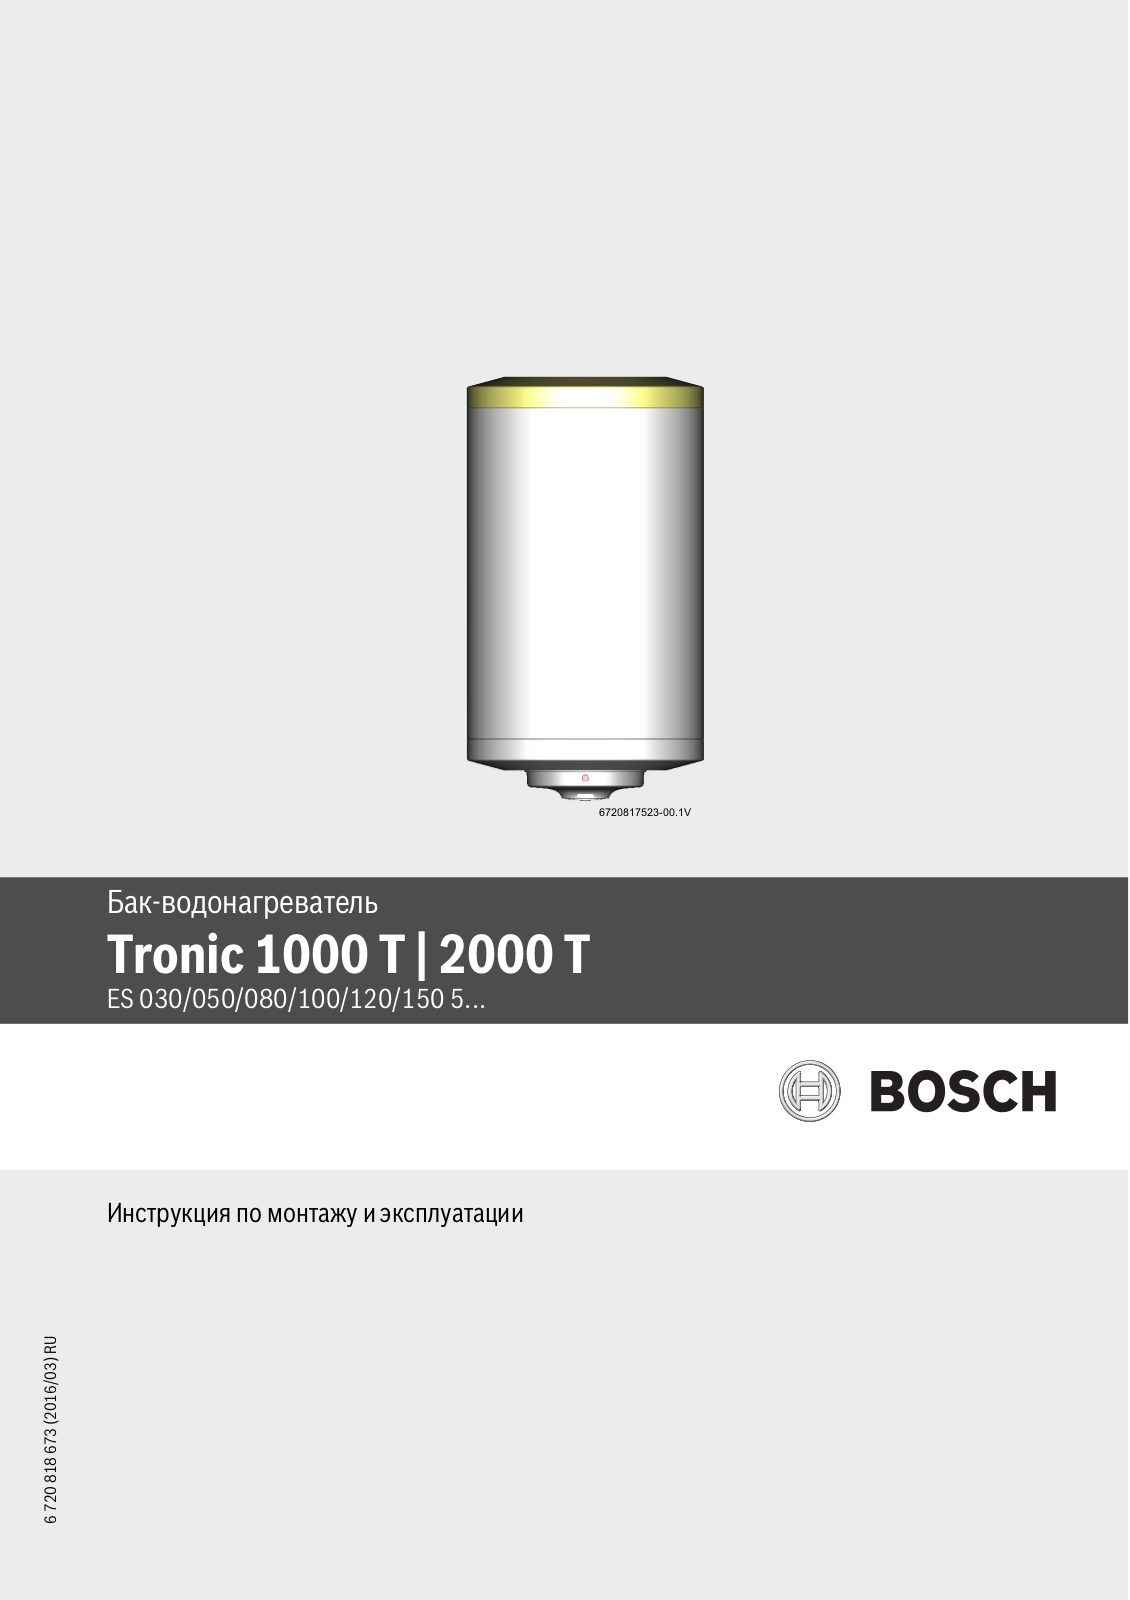 Bosch Tronic 2000T ES 050-5 M 0 WIV-B User manual